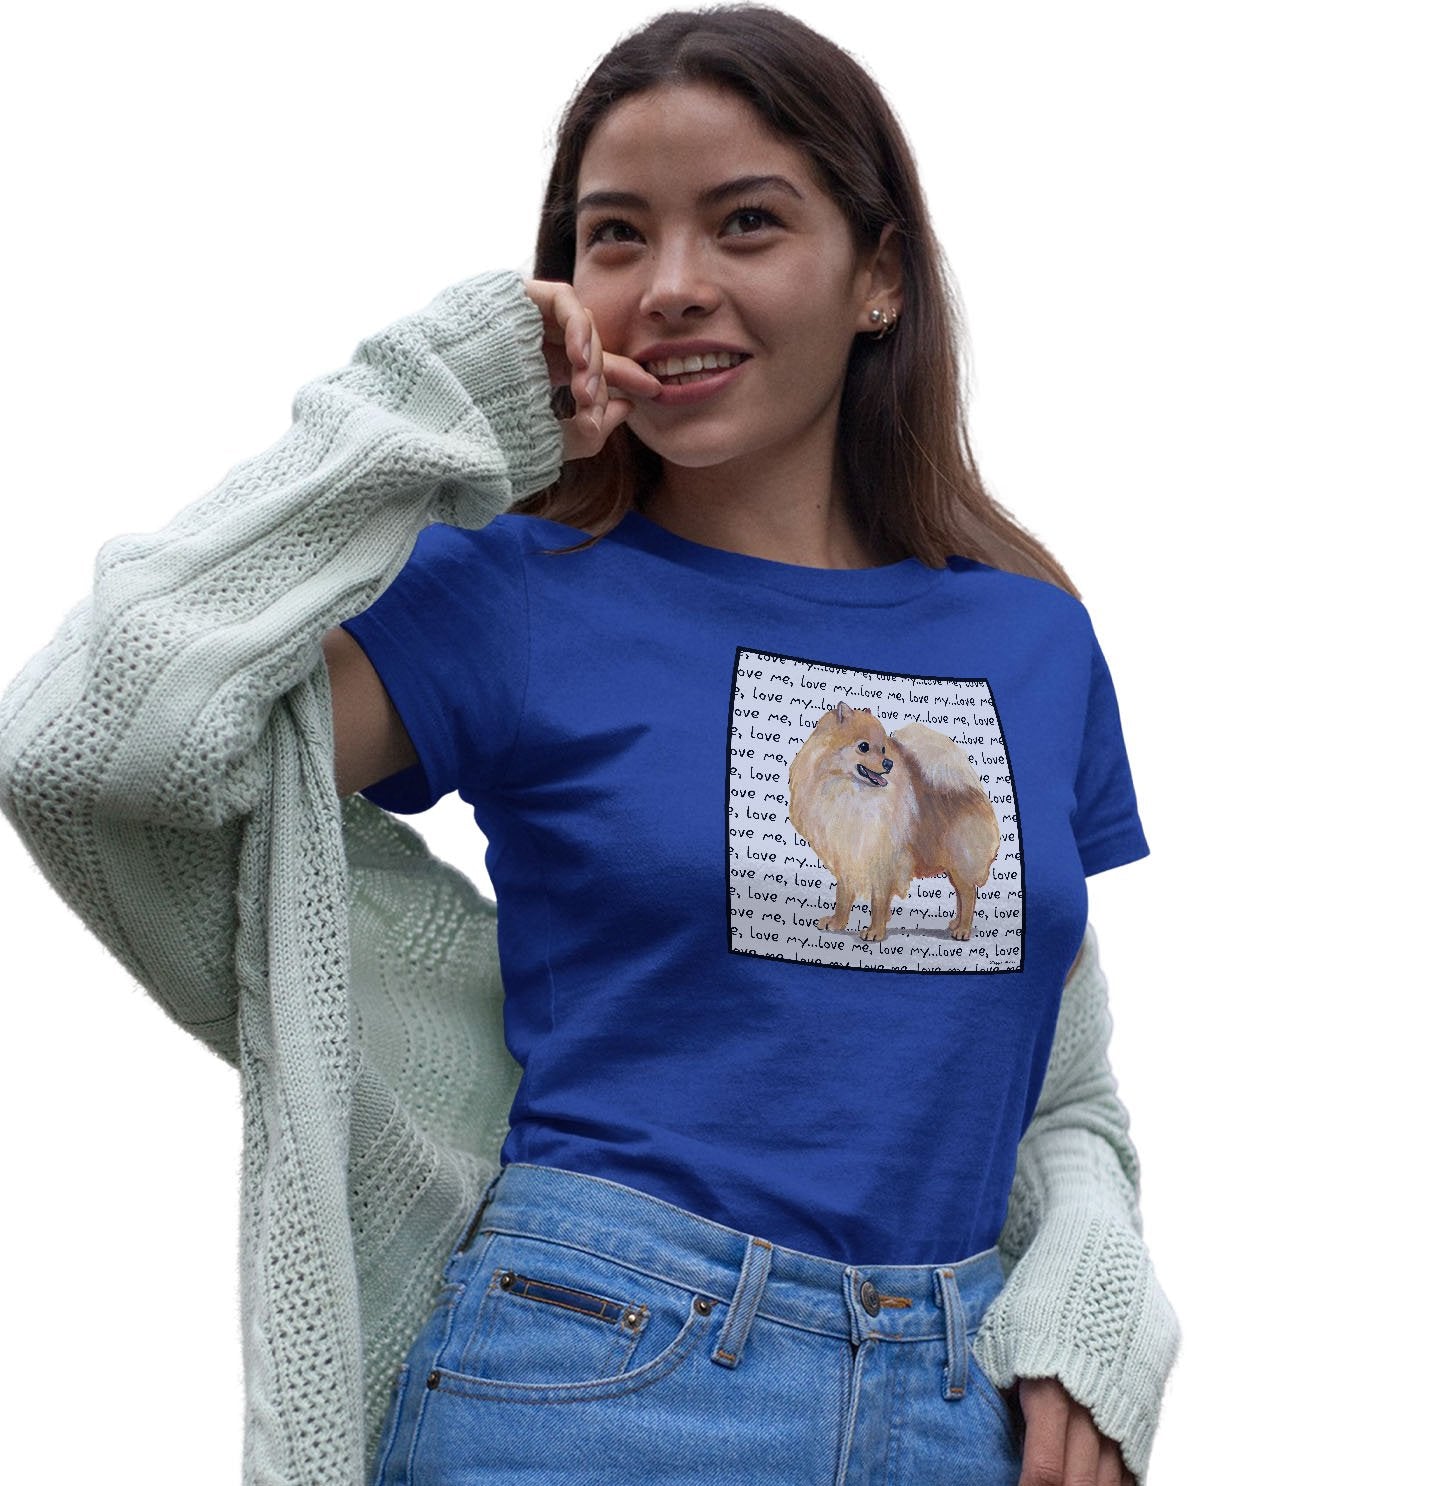 Pomeranian Love Text - Women's Fitted T-Shirt